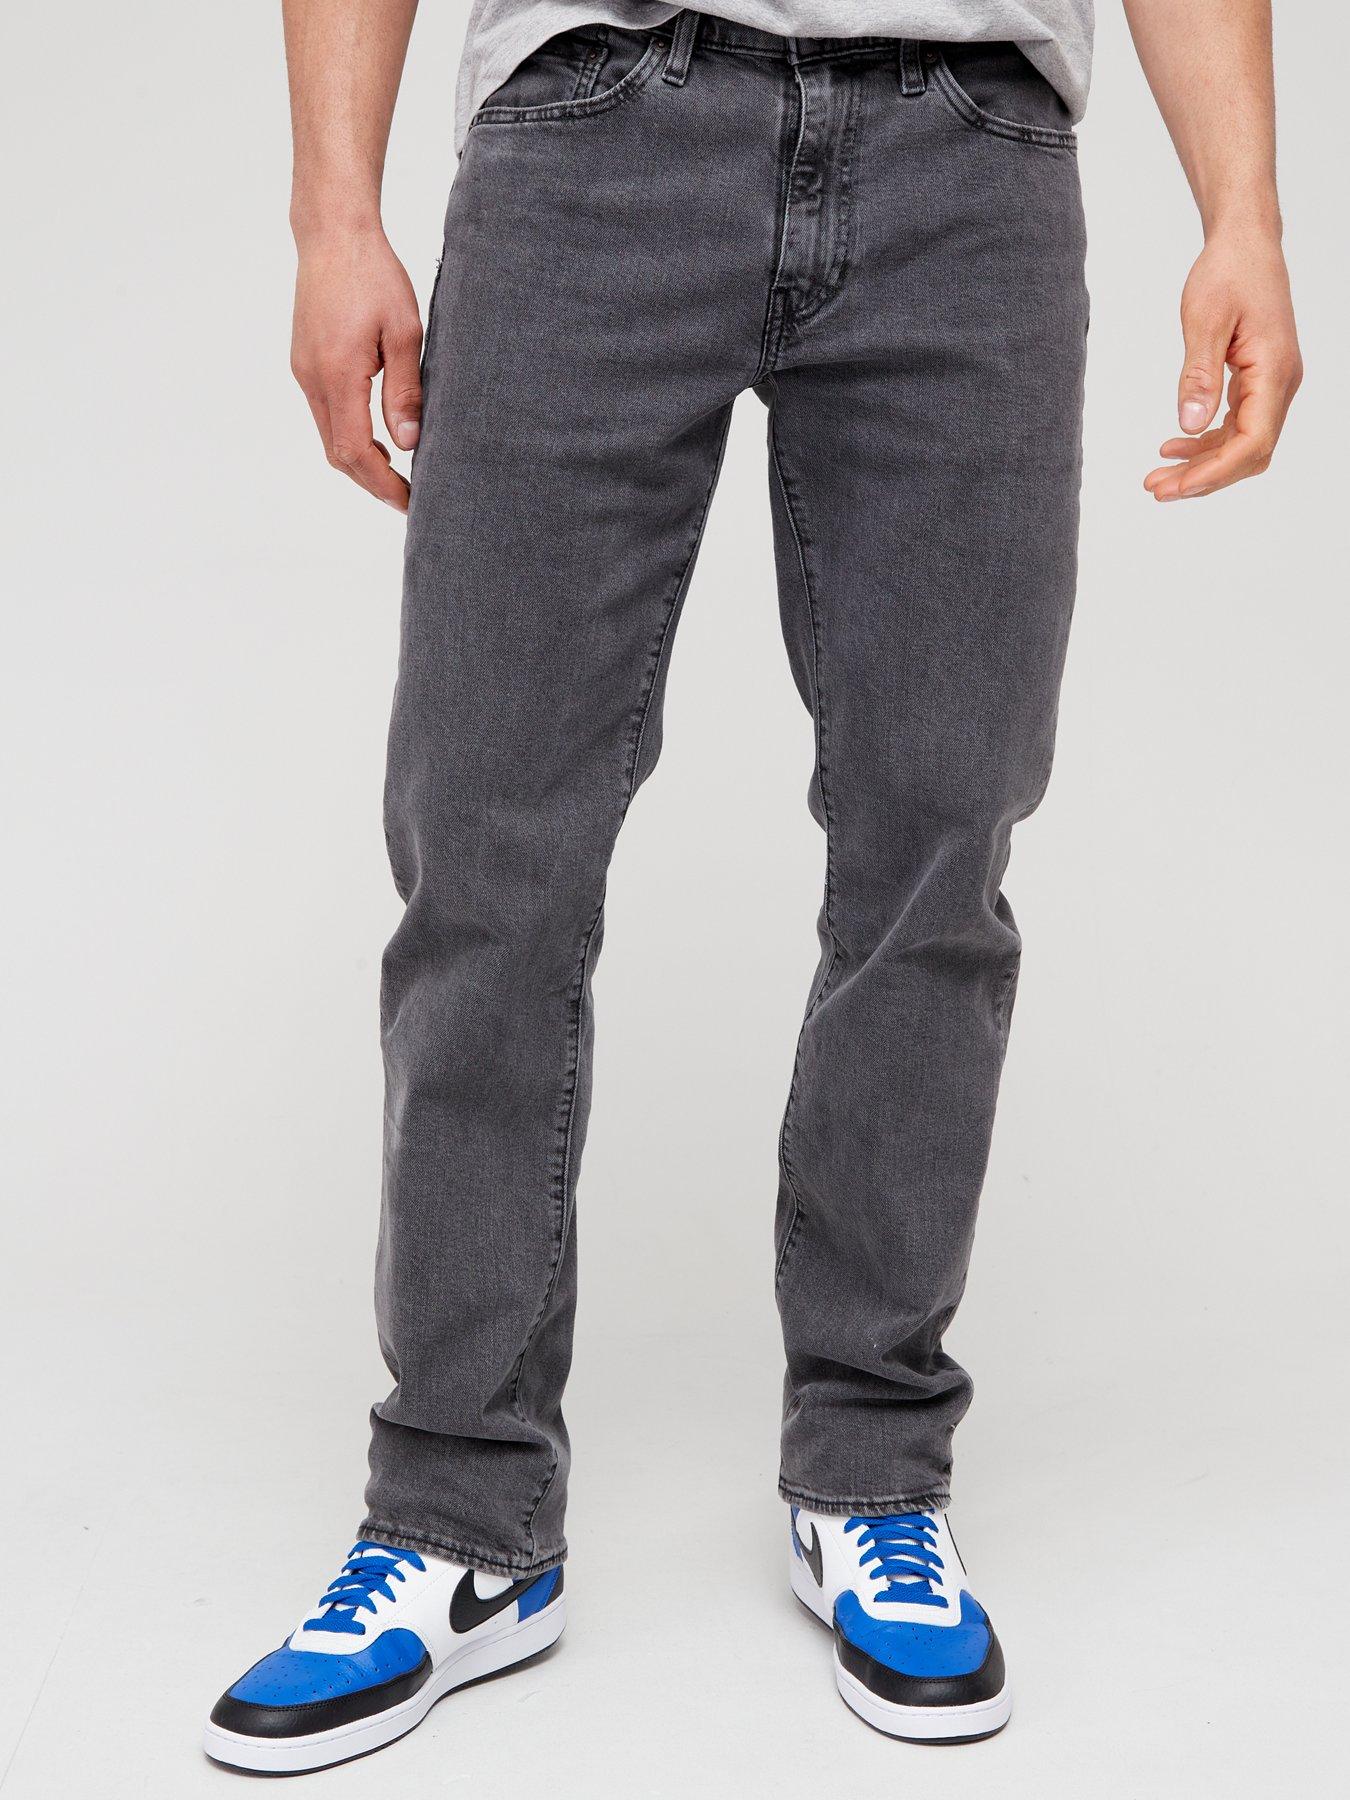 Levi's 514™ Straight Fit Jeans - Dark Grey Wash 